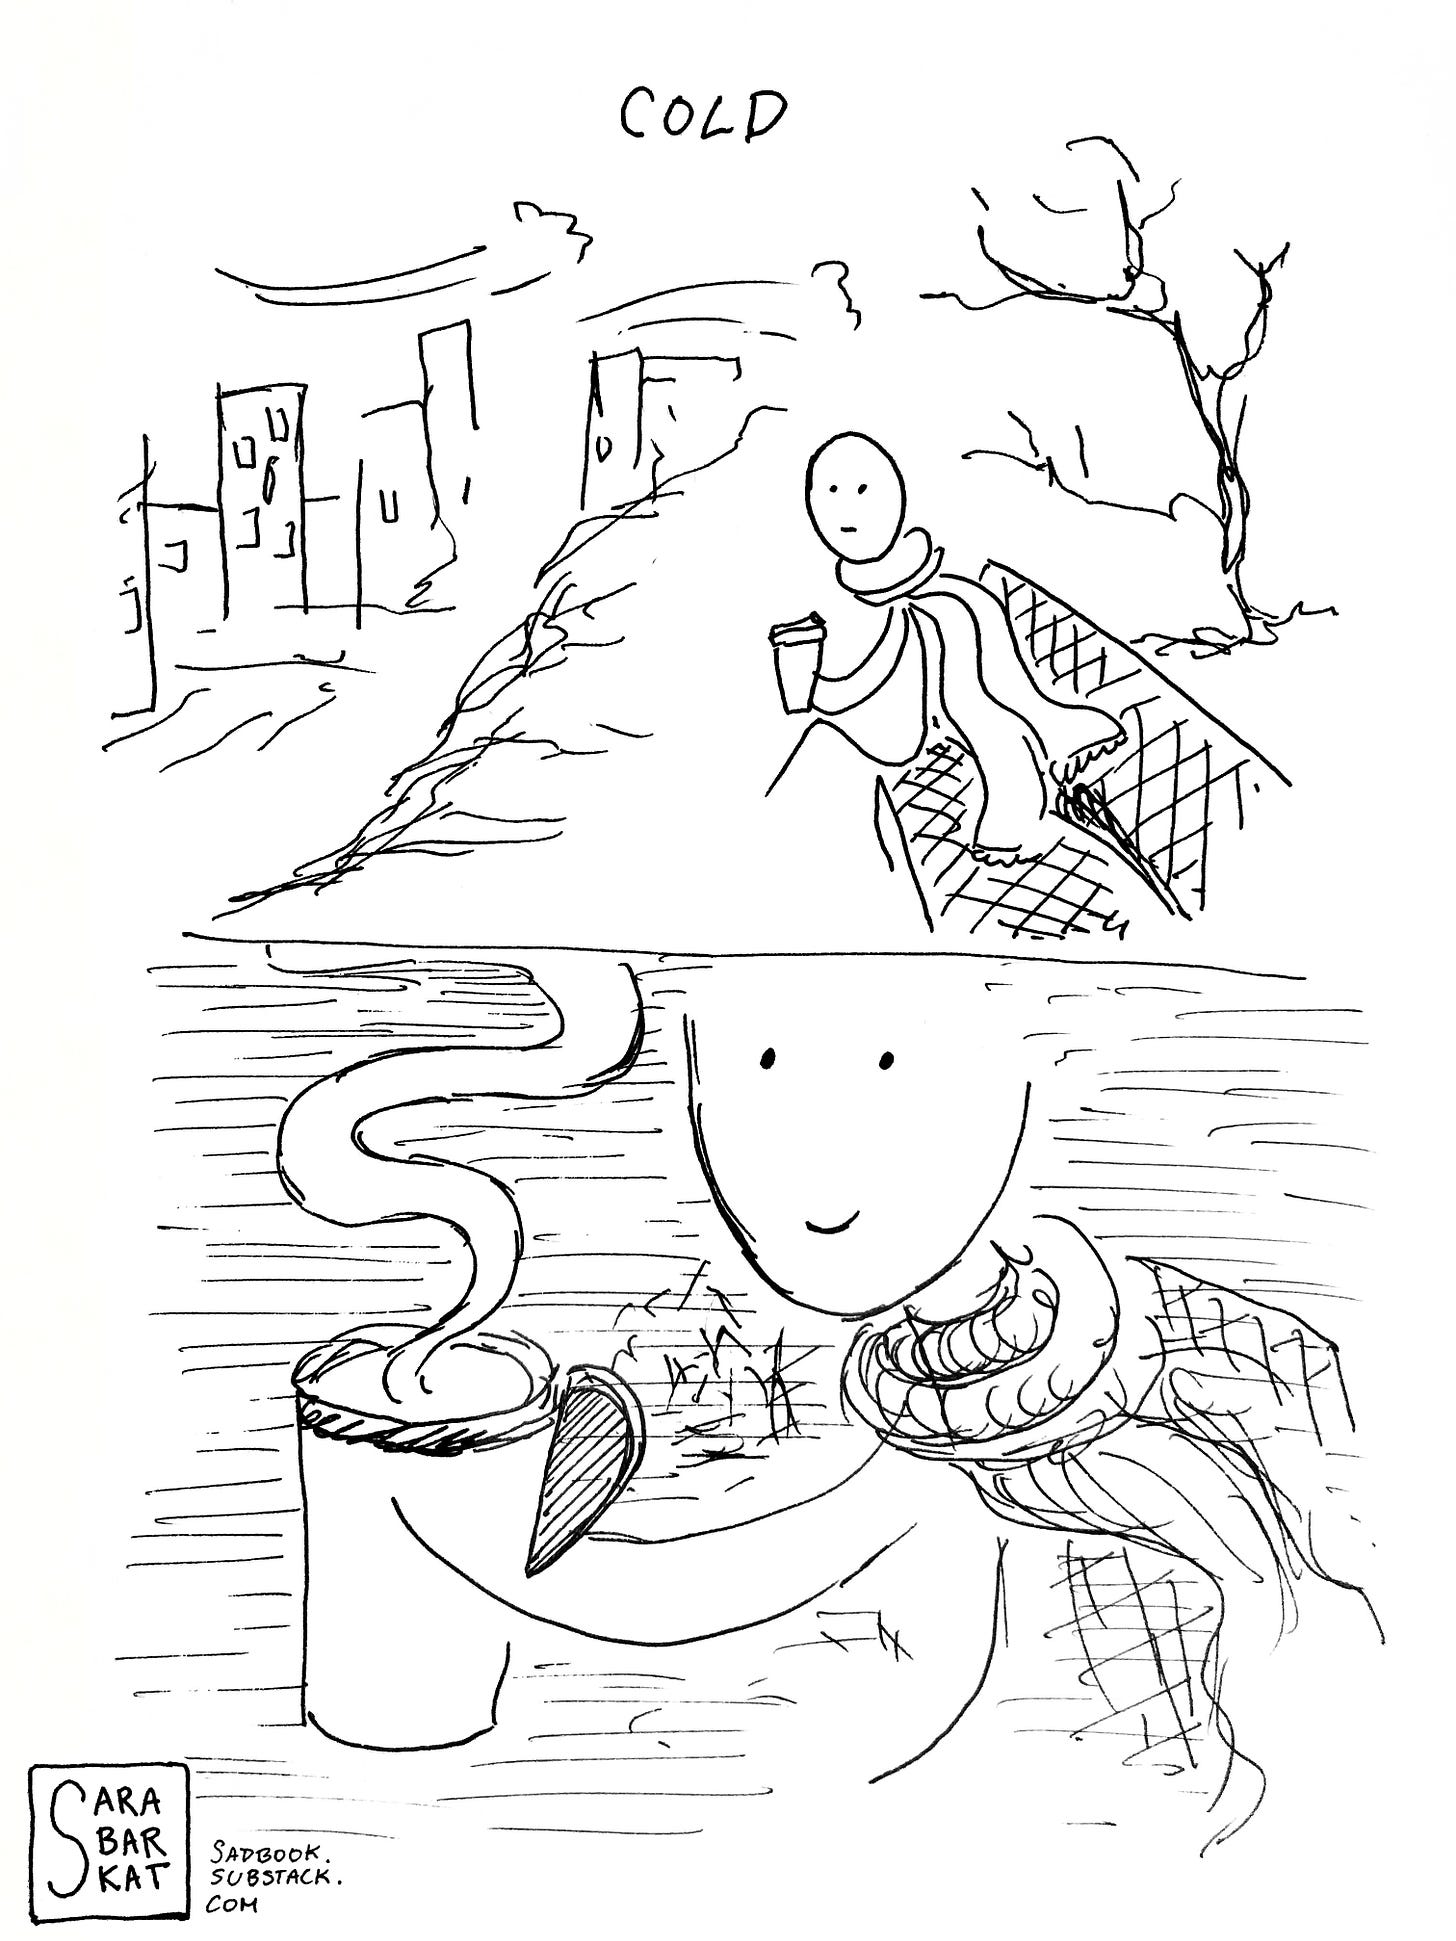 sadbook collections comic strip happy wintertime hot beverage